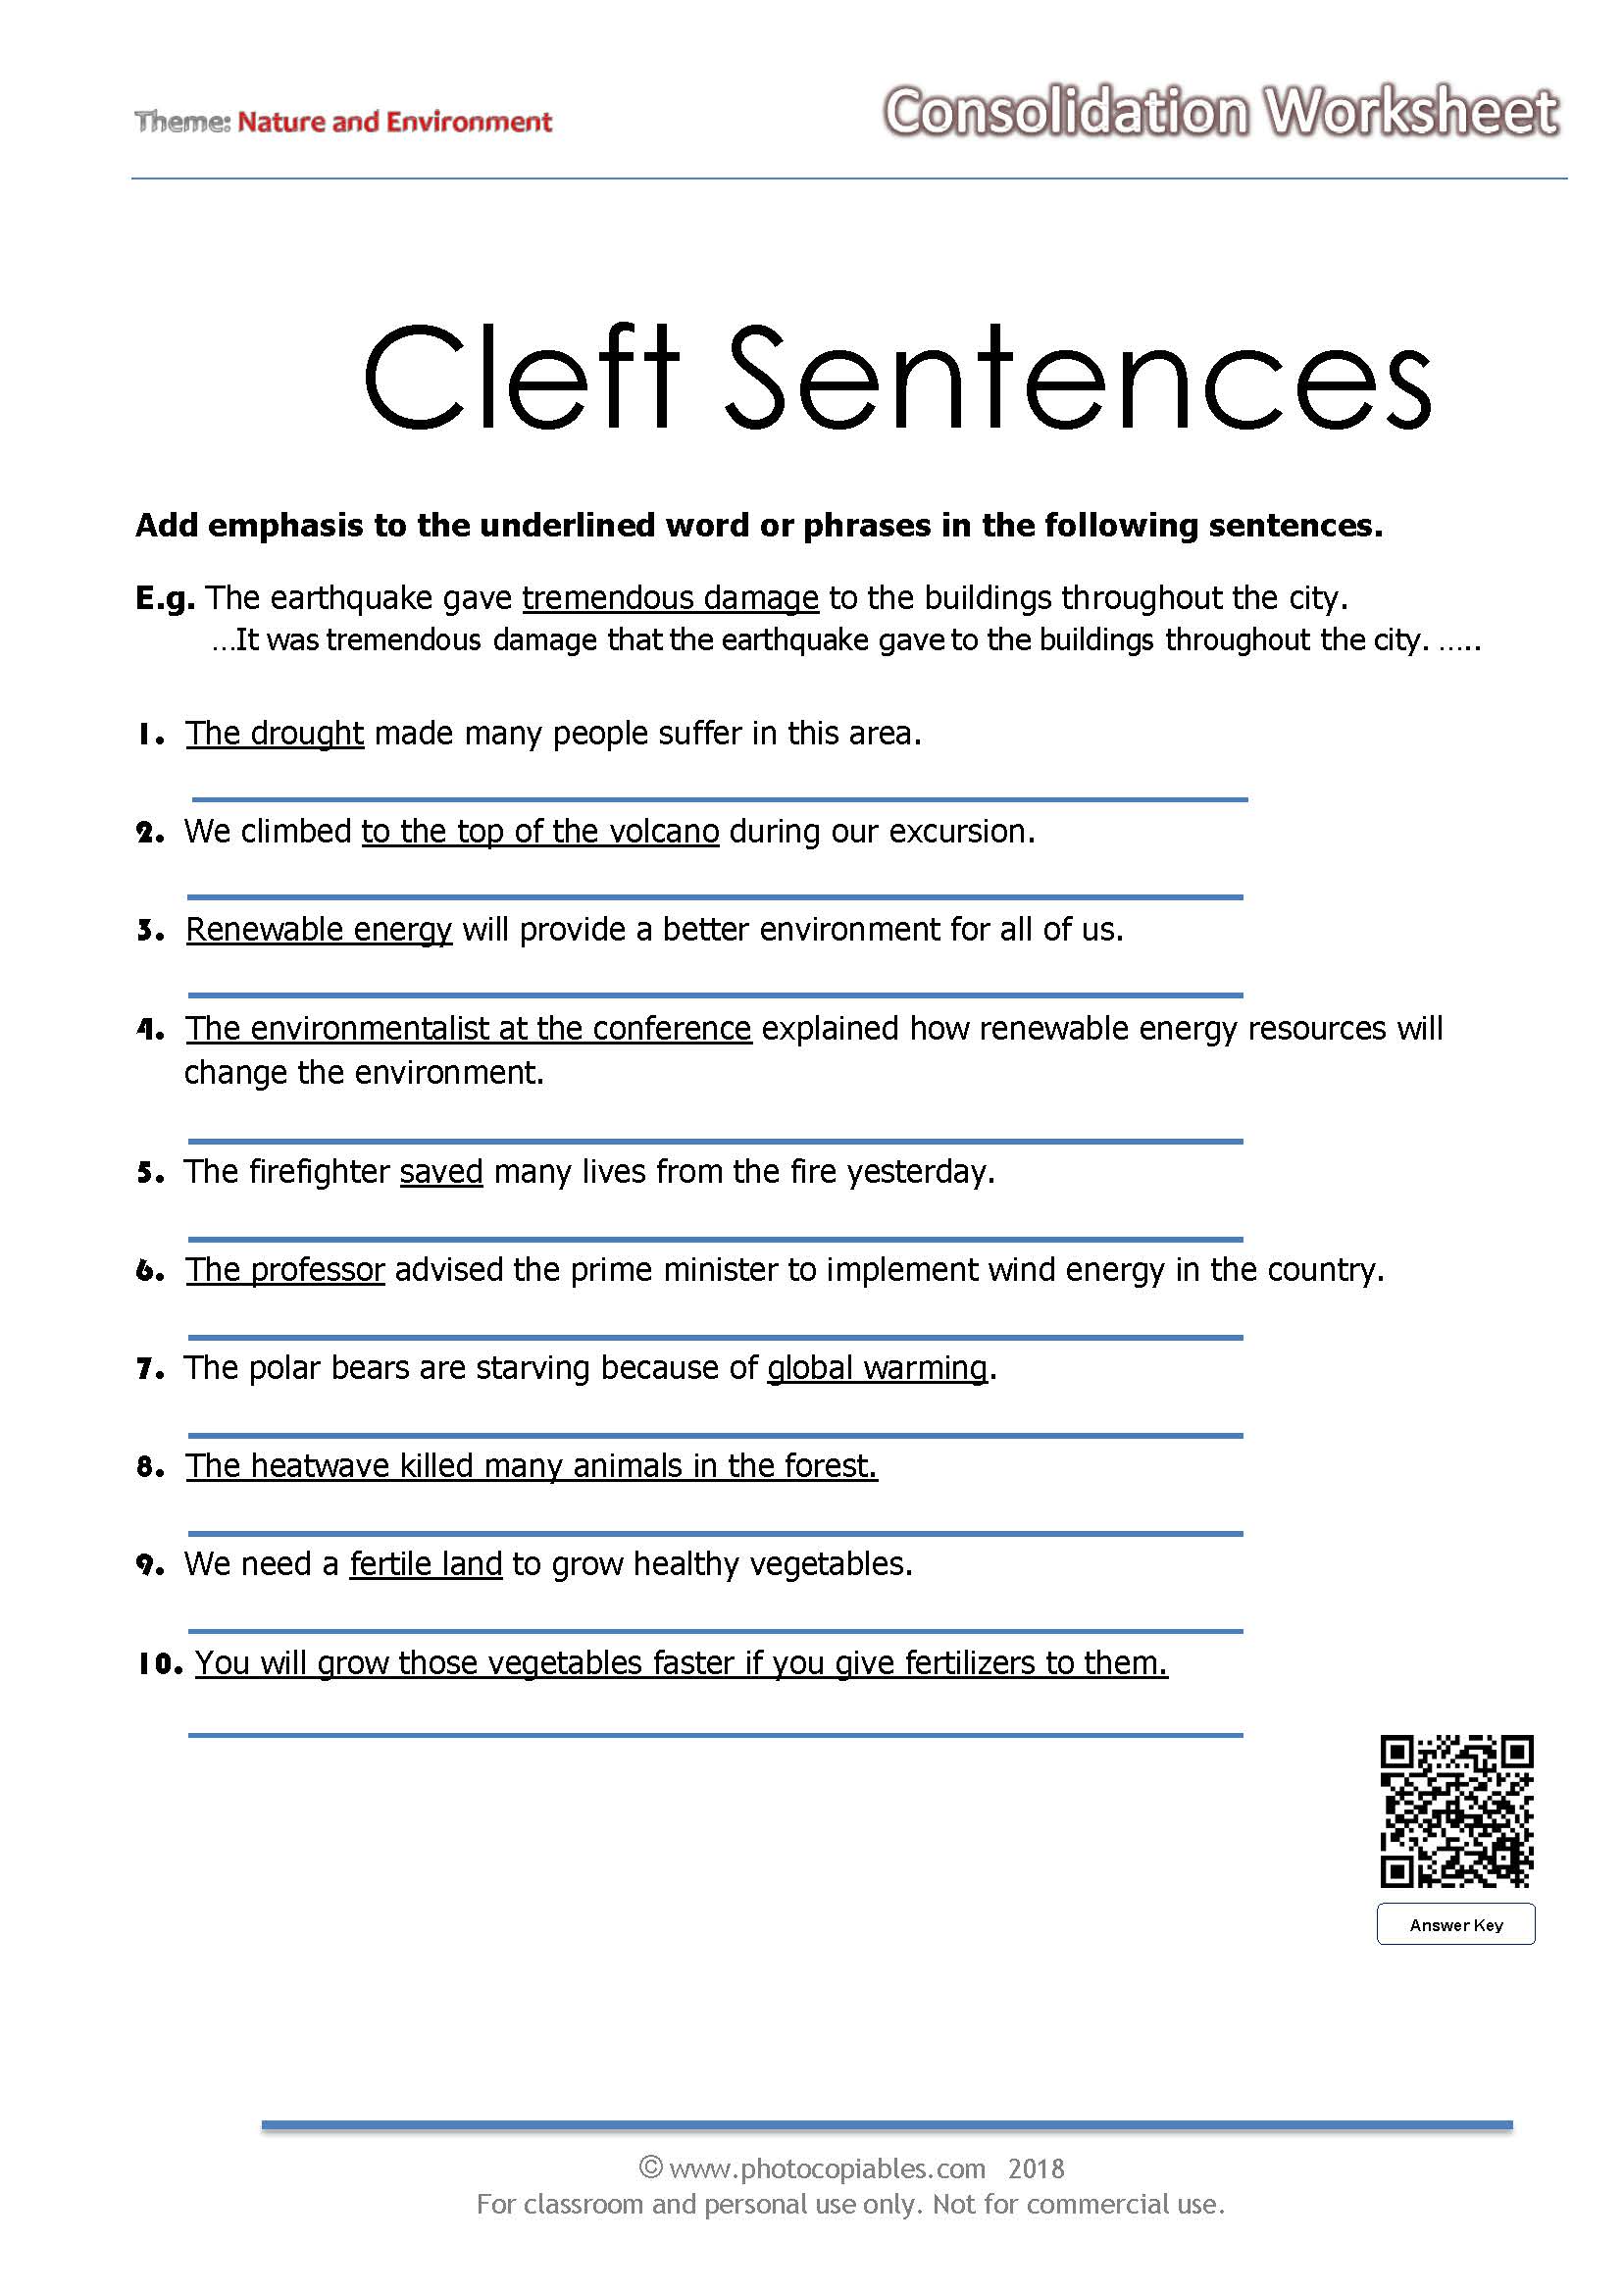 Cleft Sentences Worksheet Photocopiables